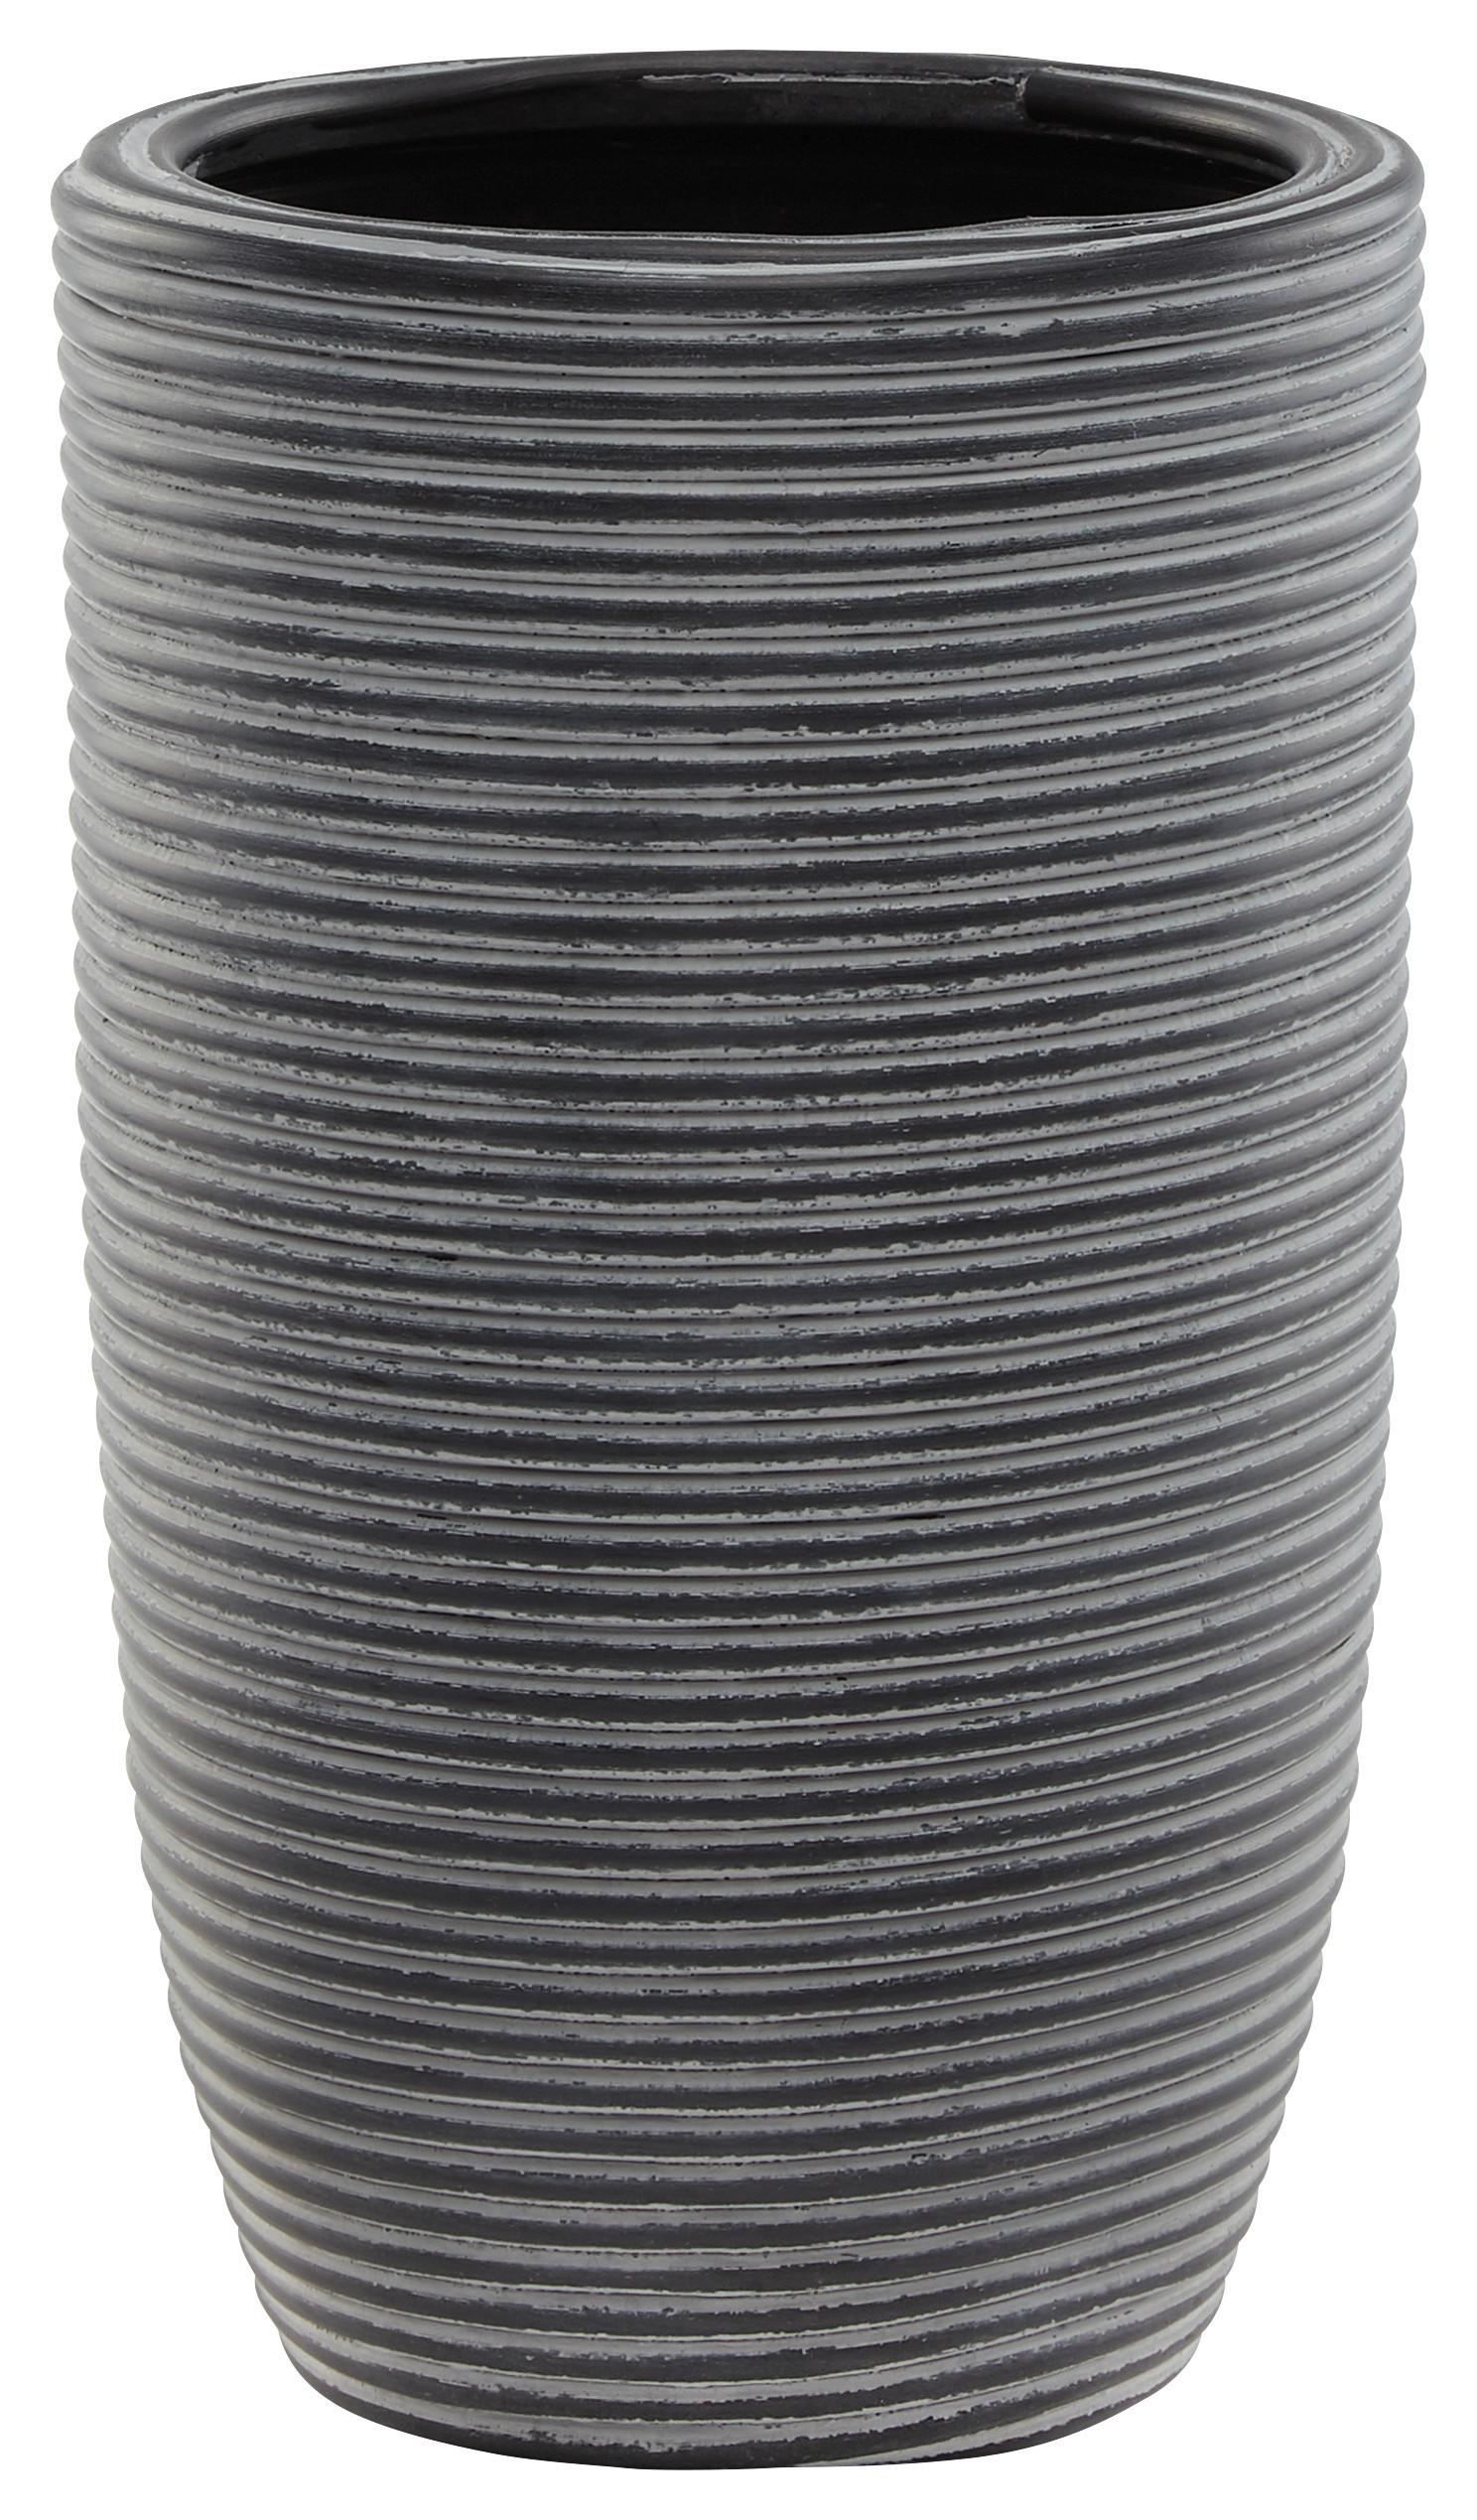 Vas ornamental pentru ghiveci MARLENE - negru, plastic (16/26cm) - Modern Living